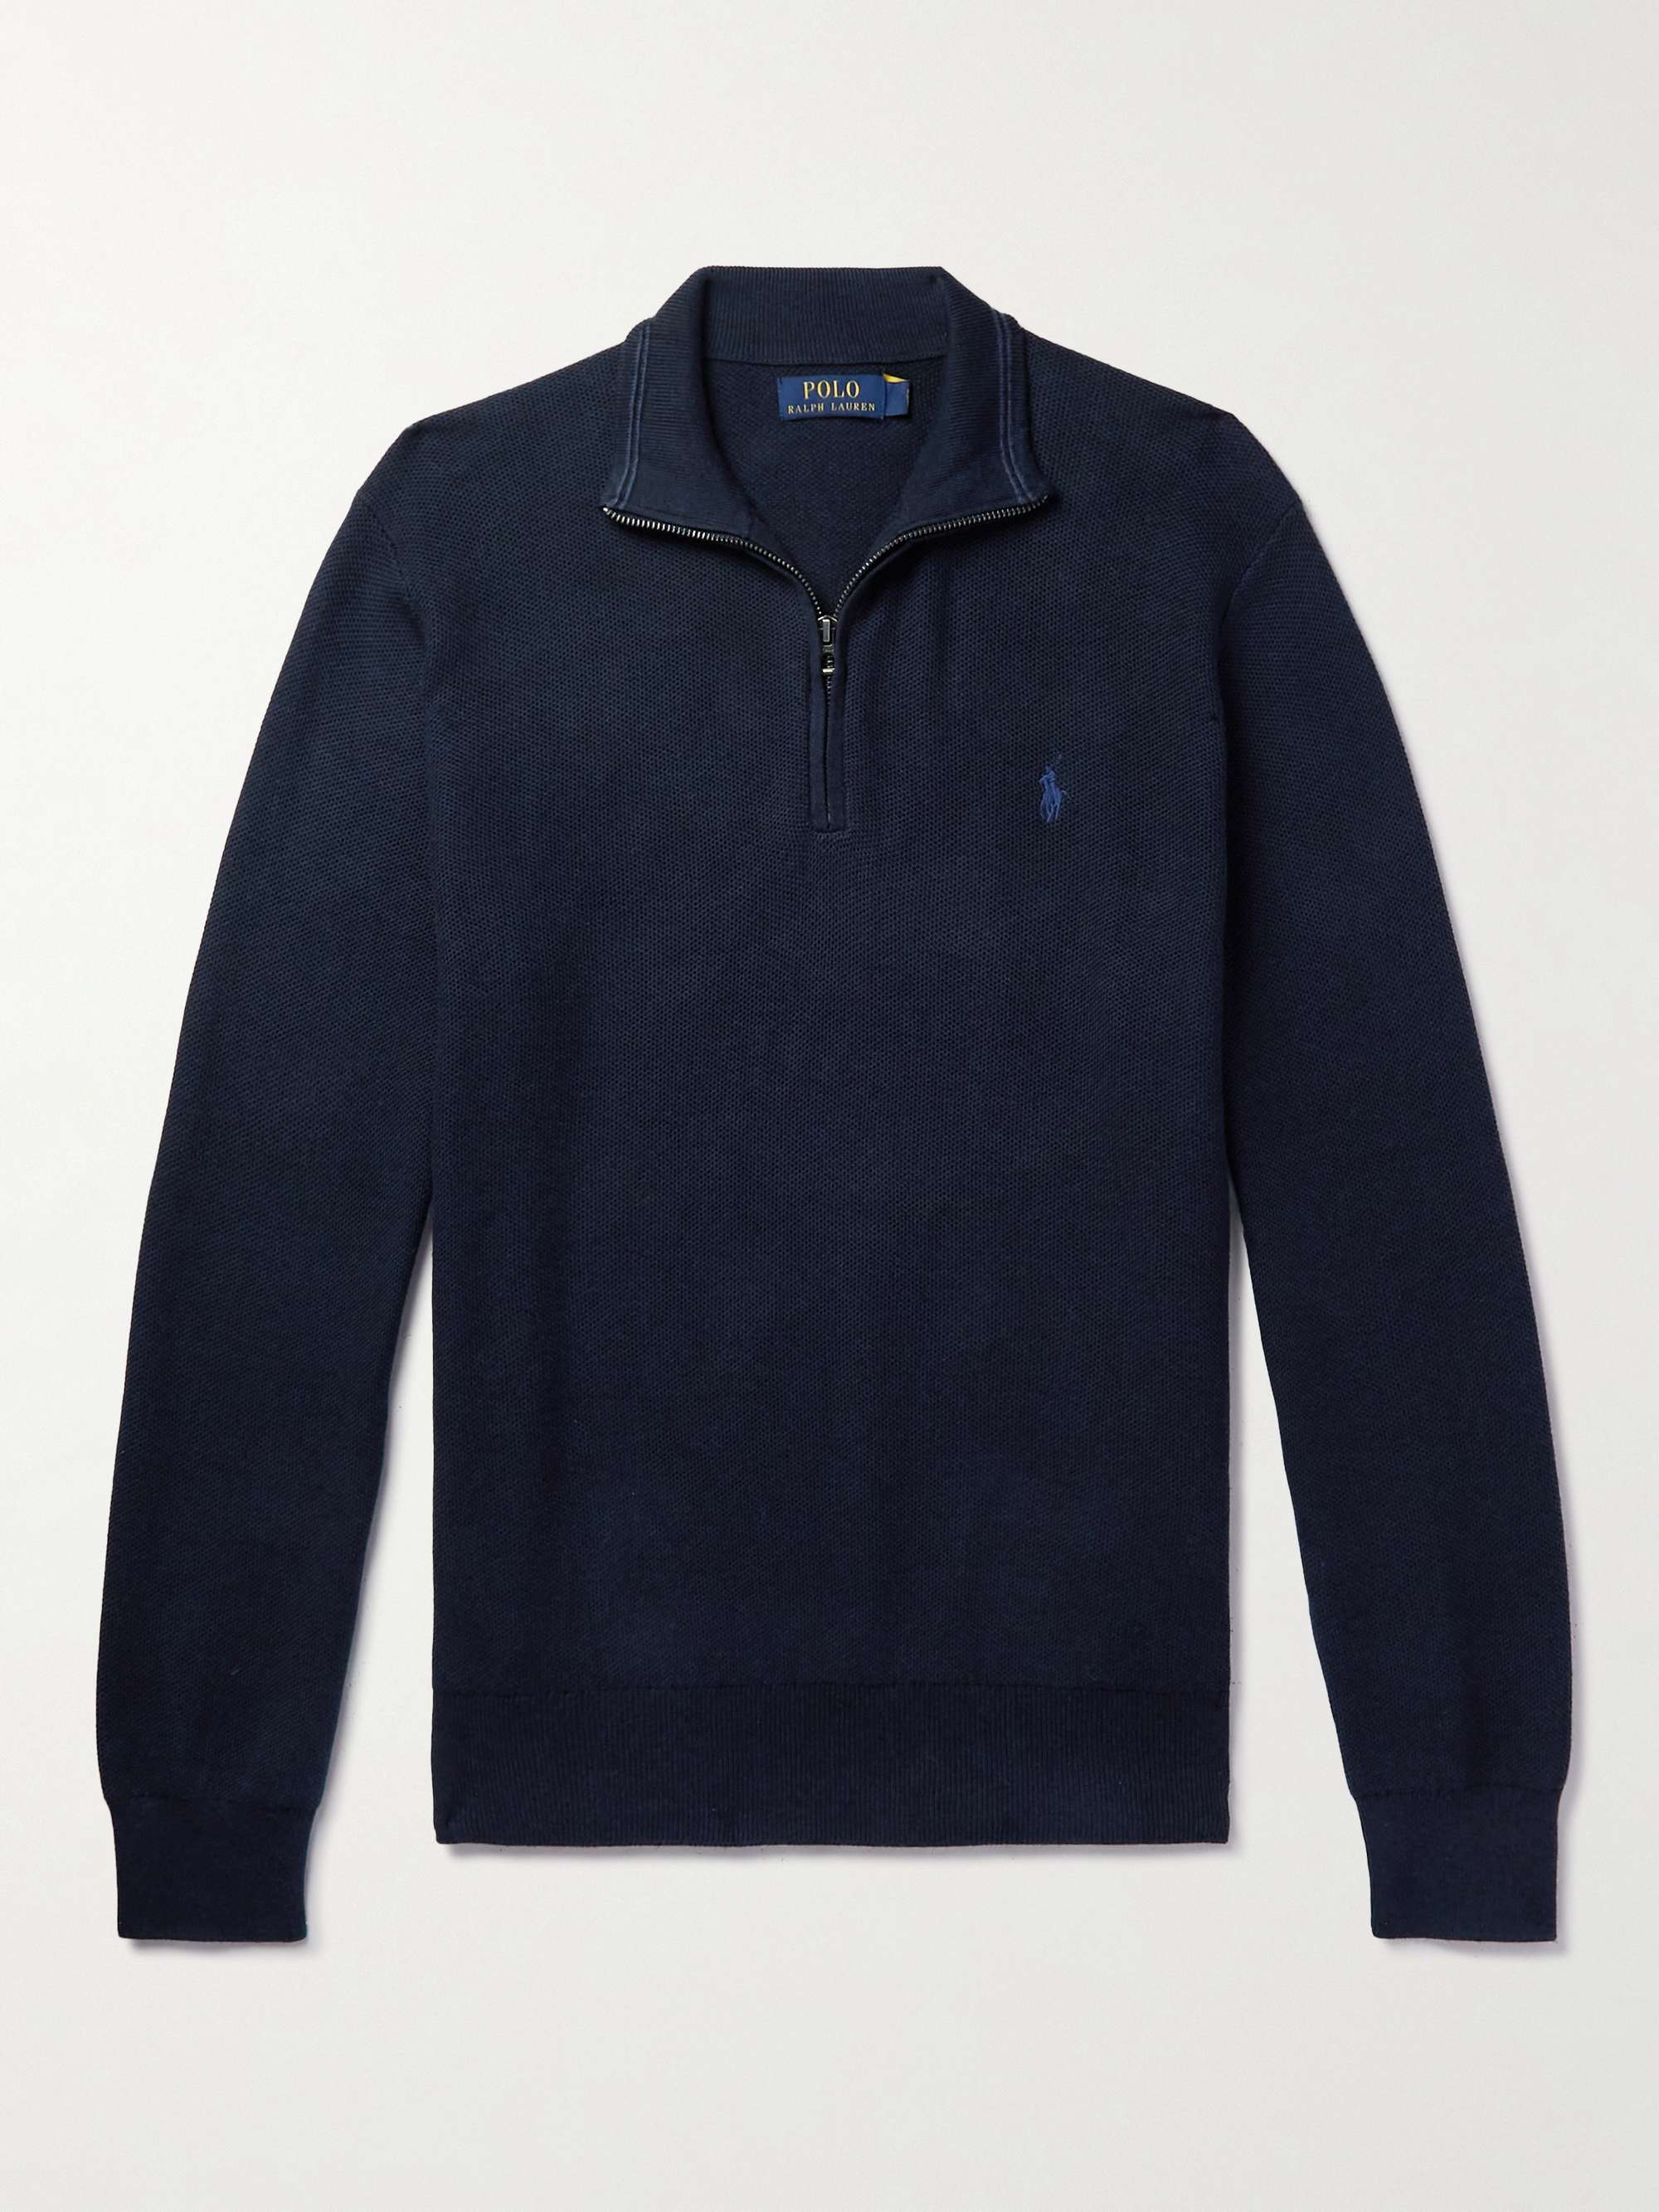 POLO RALPH LAUREN Logo-Embroidered Cotton-Jersey Half-Zip Sweater